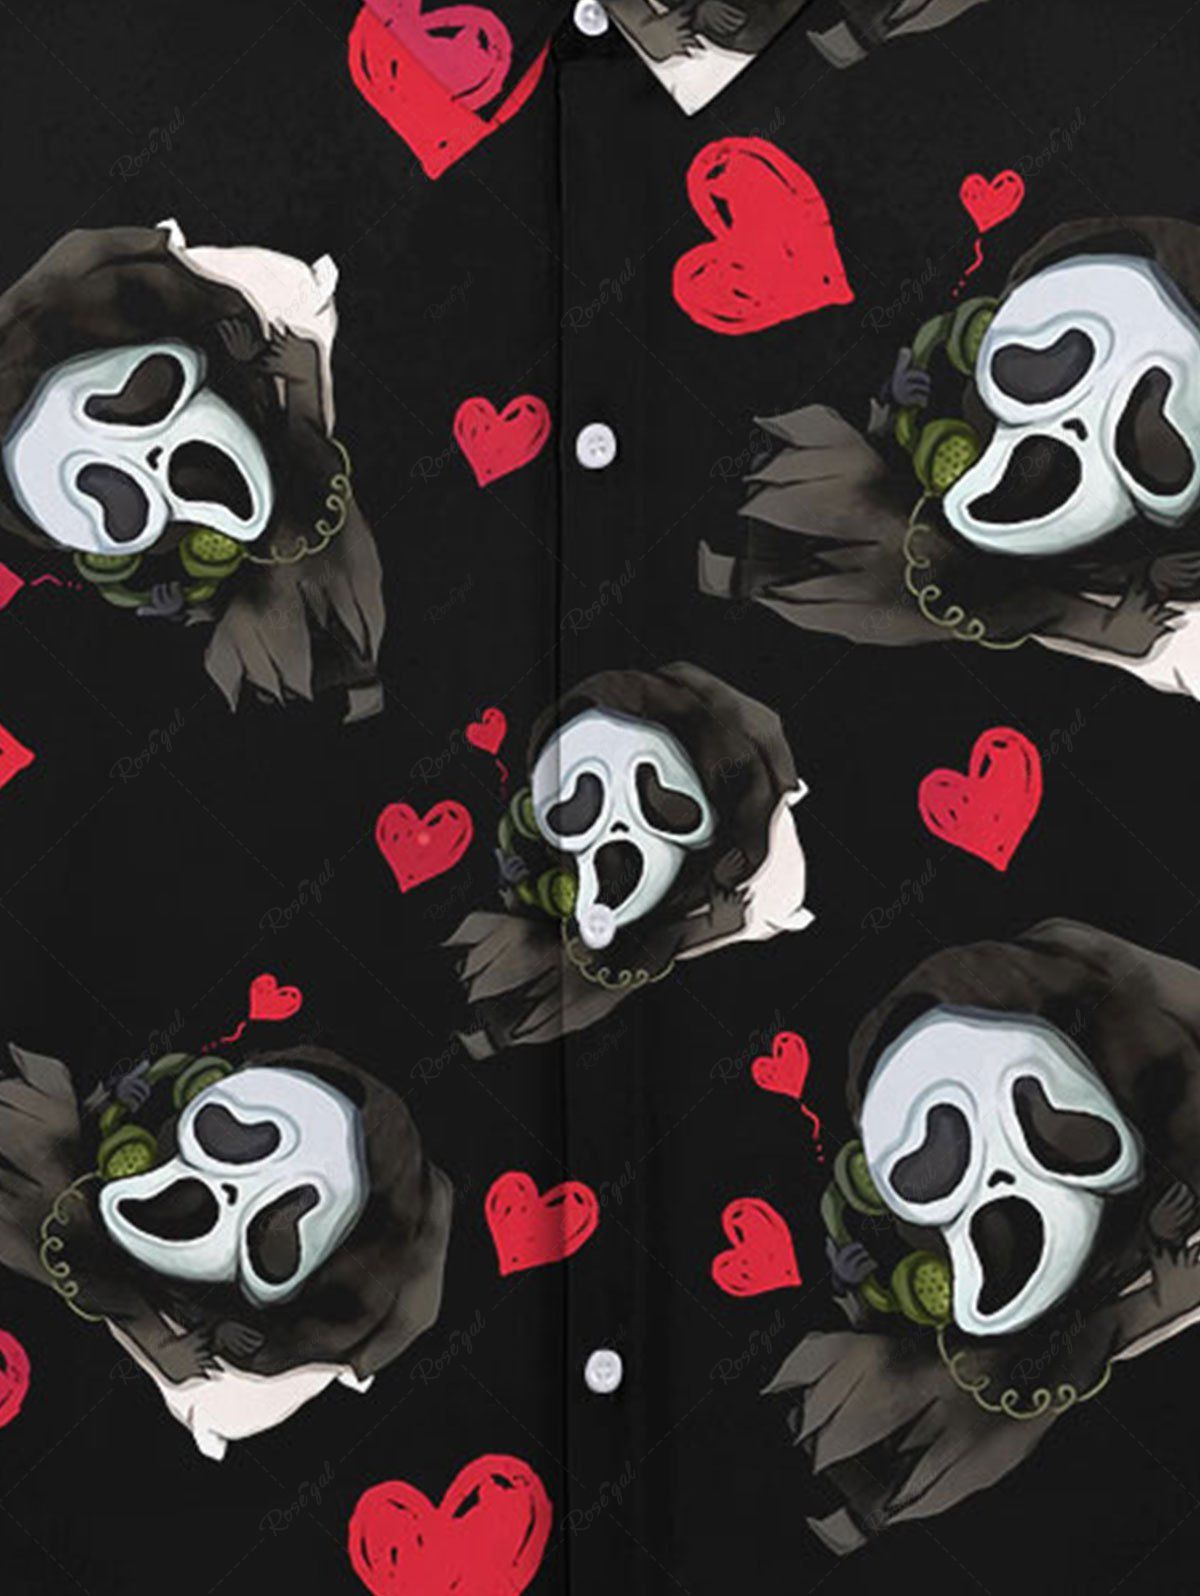 Gothic Valentine's Day Skulls Ghost Heart Print Button Down Shirt For Men